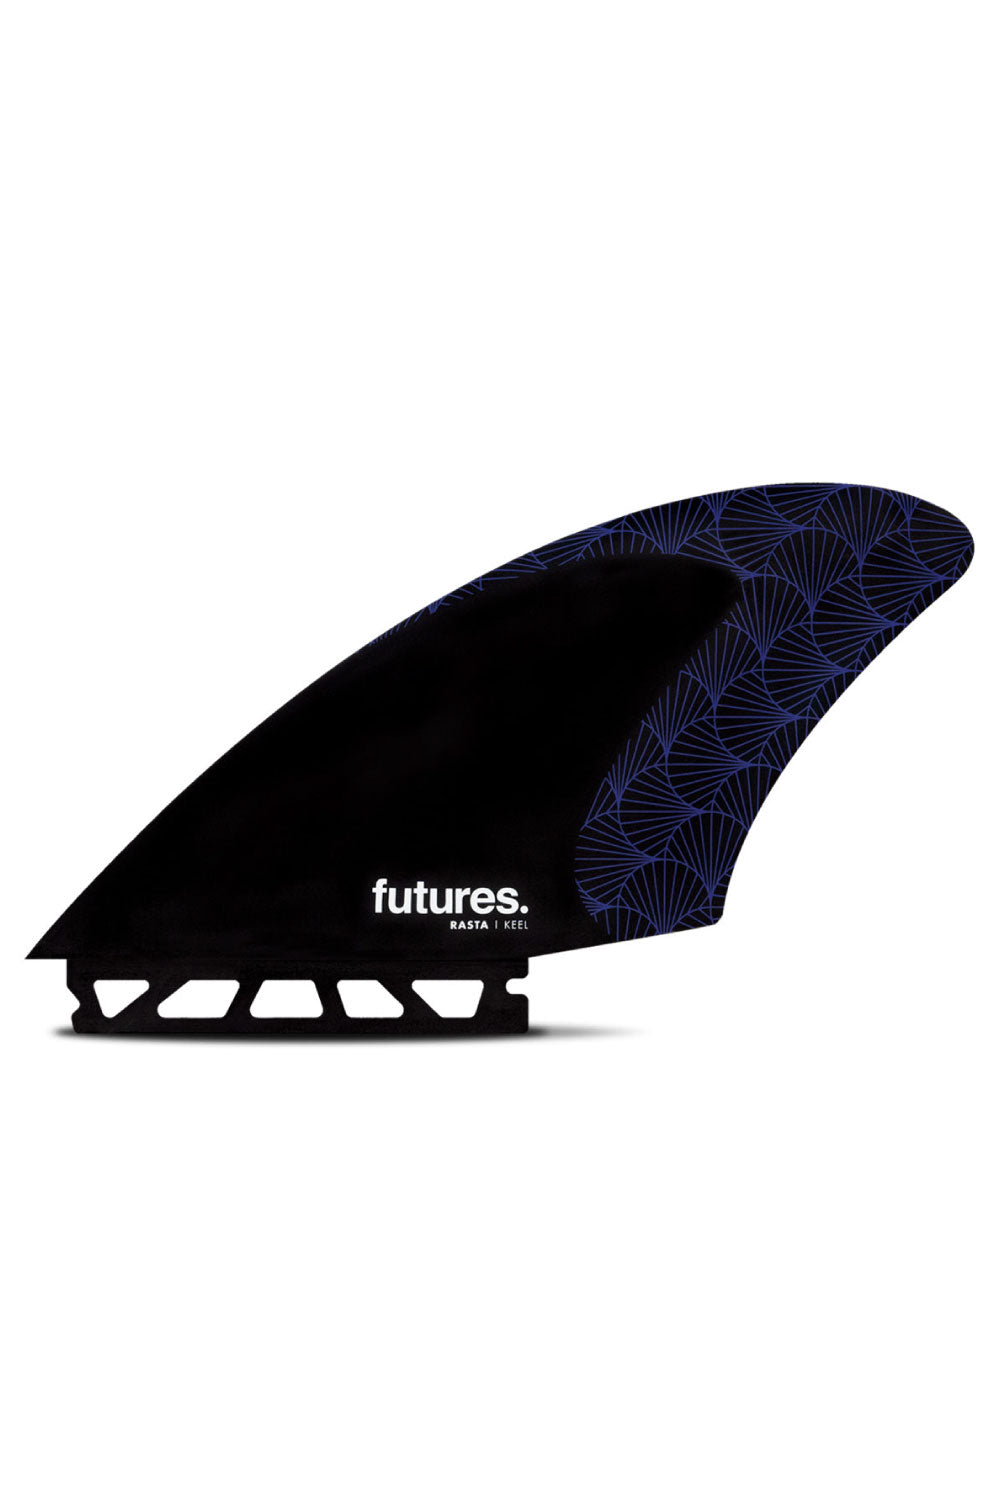 Futures Fins Rasta HC Keel Fin Set - Black/Purple